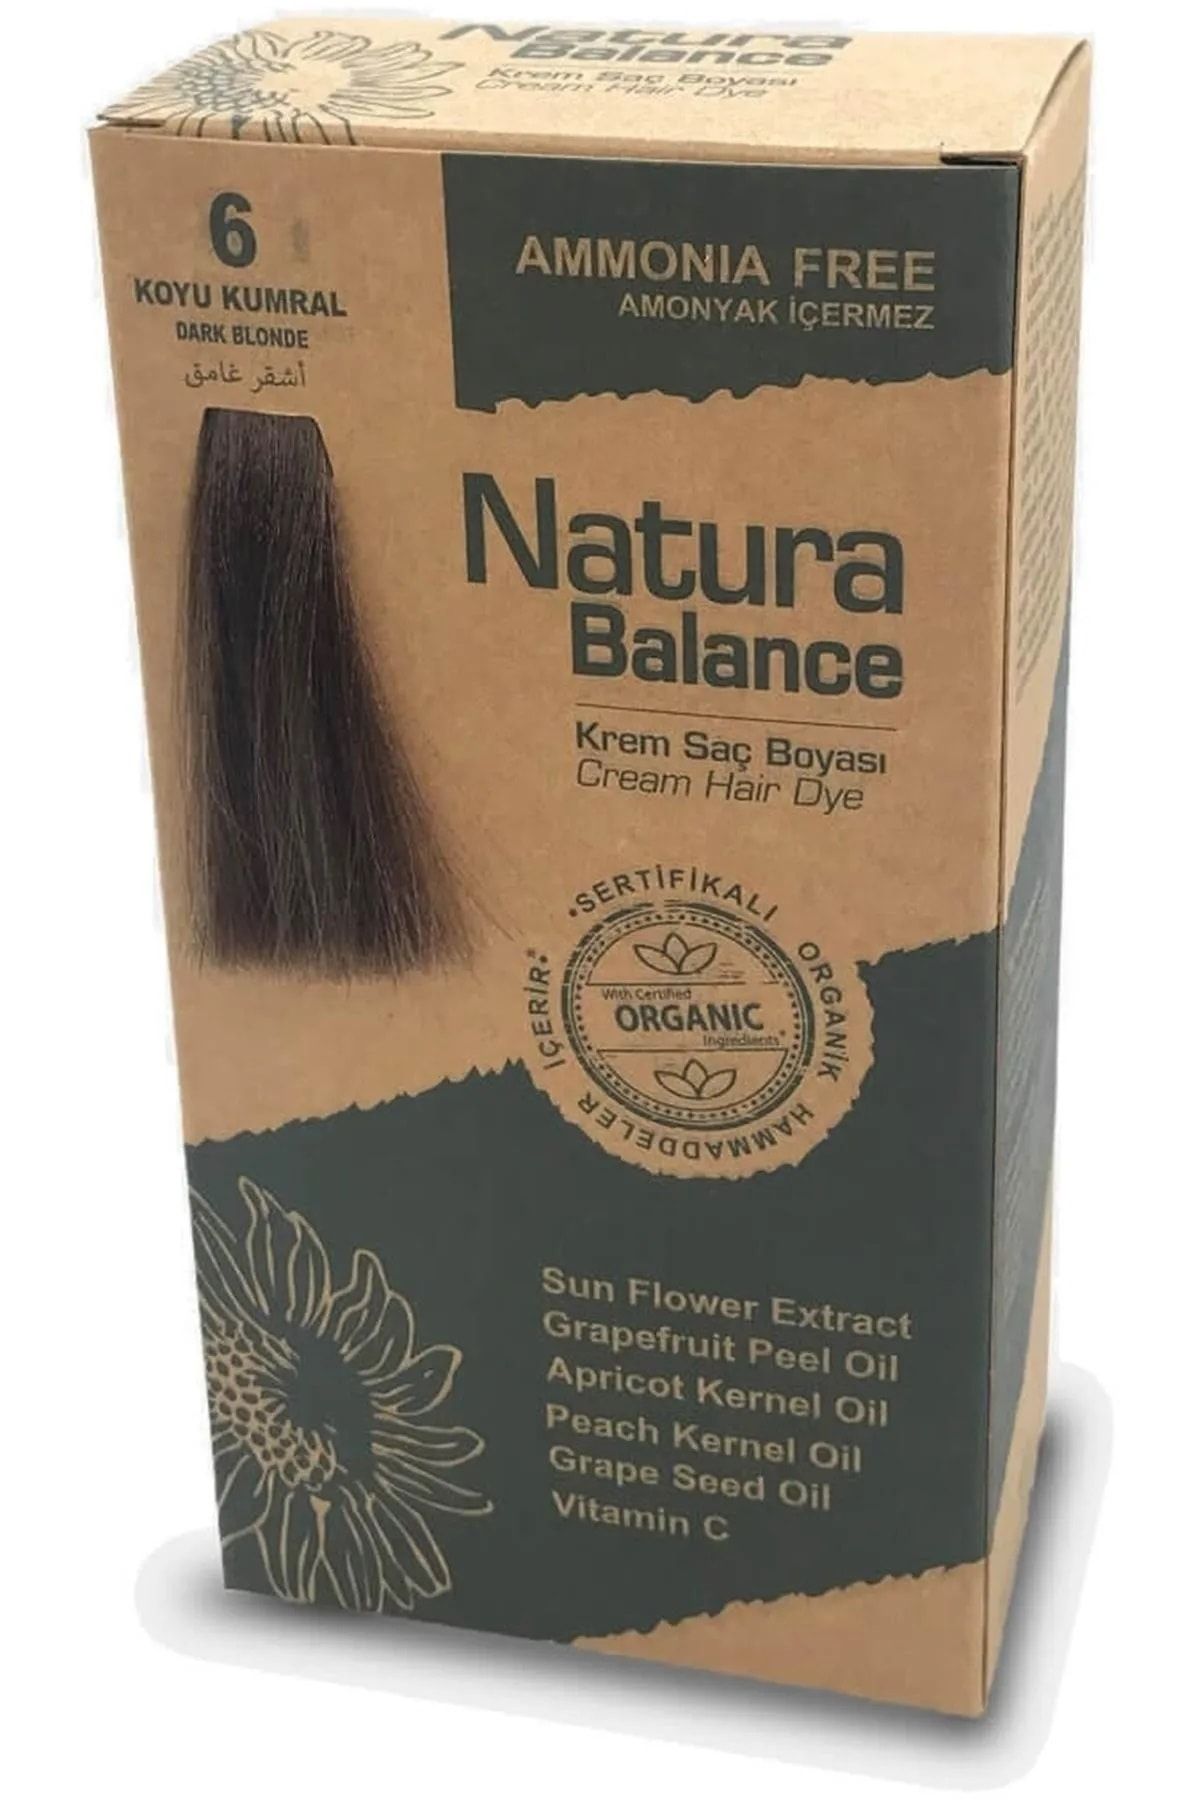 NATURABALANCE Natura Balance 6 Koyu Kumral Organik Krem Saç Boyası